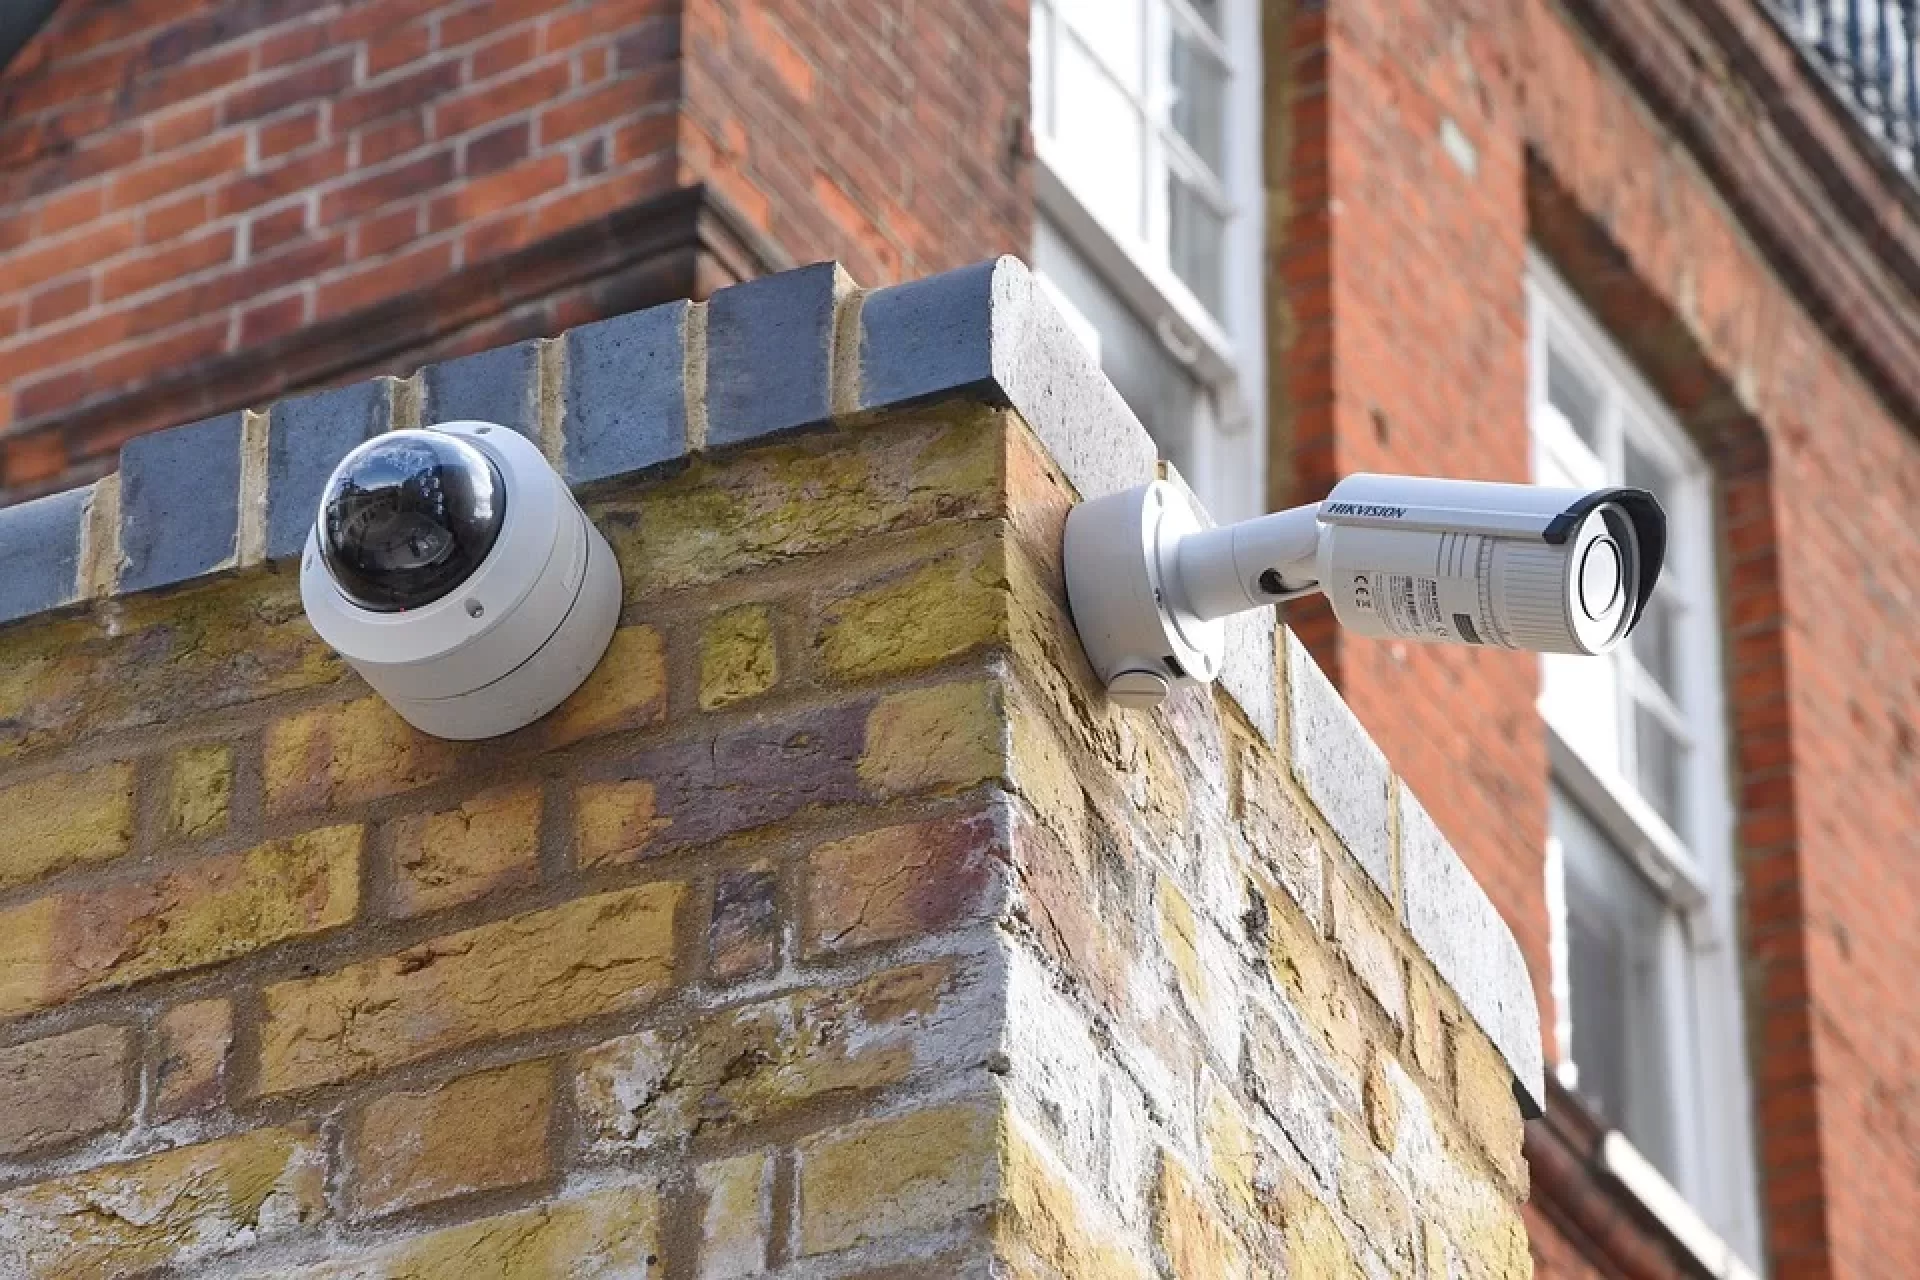 Two CCTV cameras on brick wall